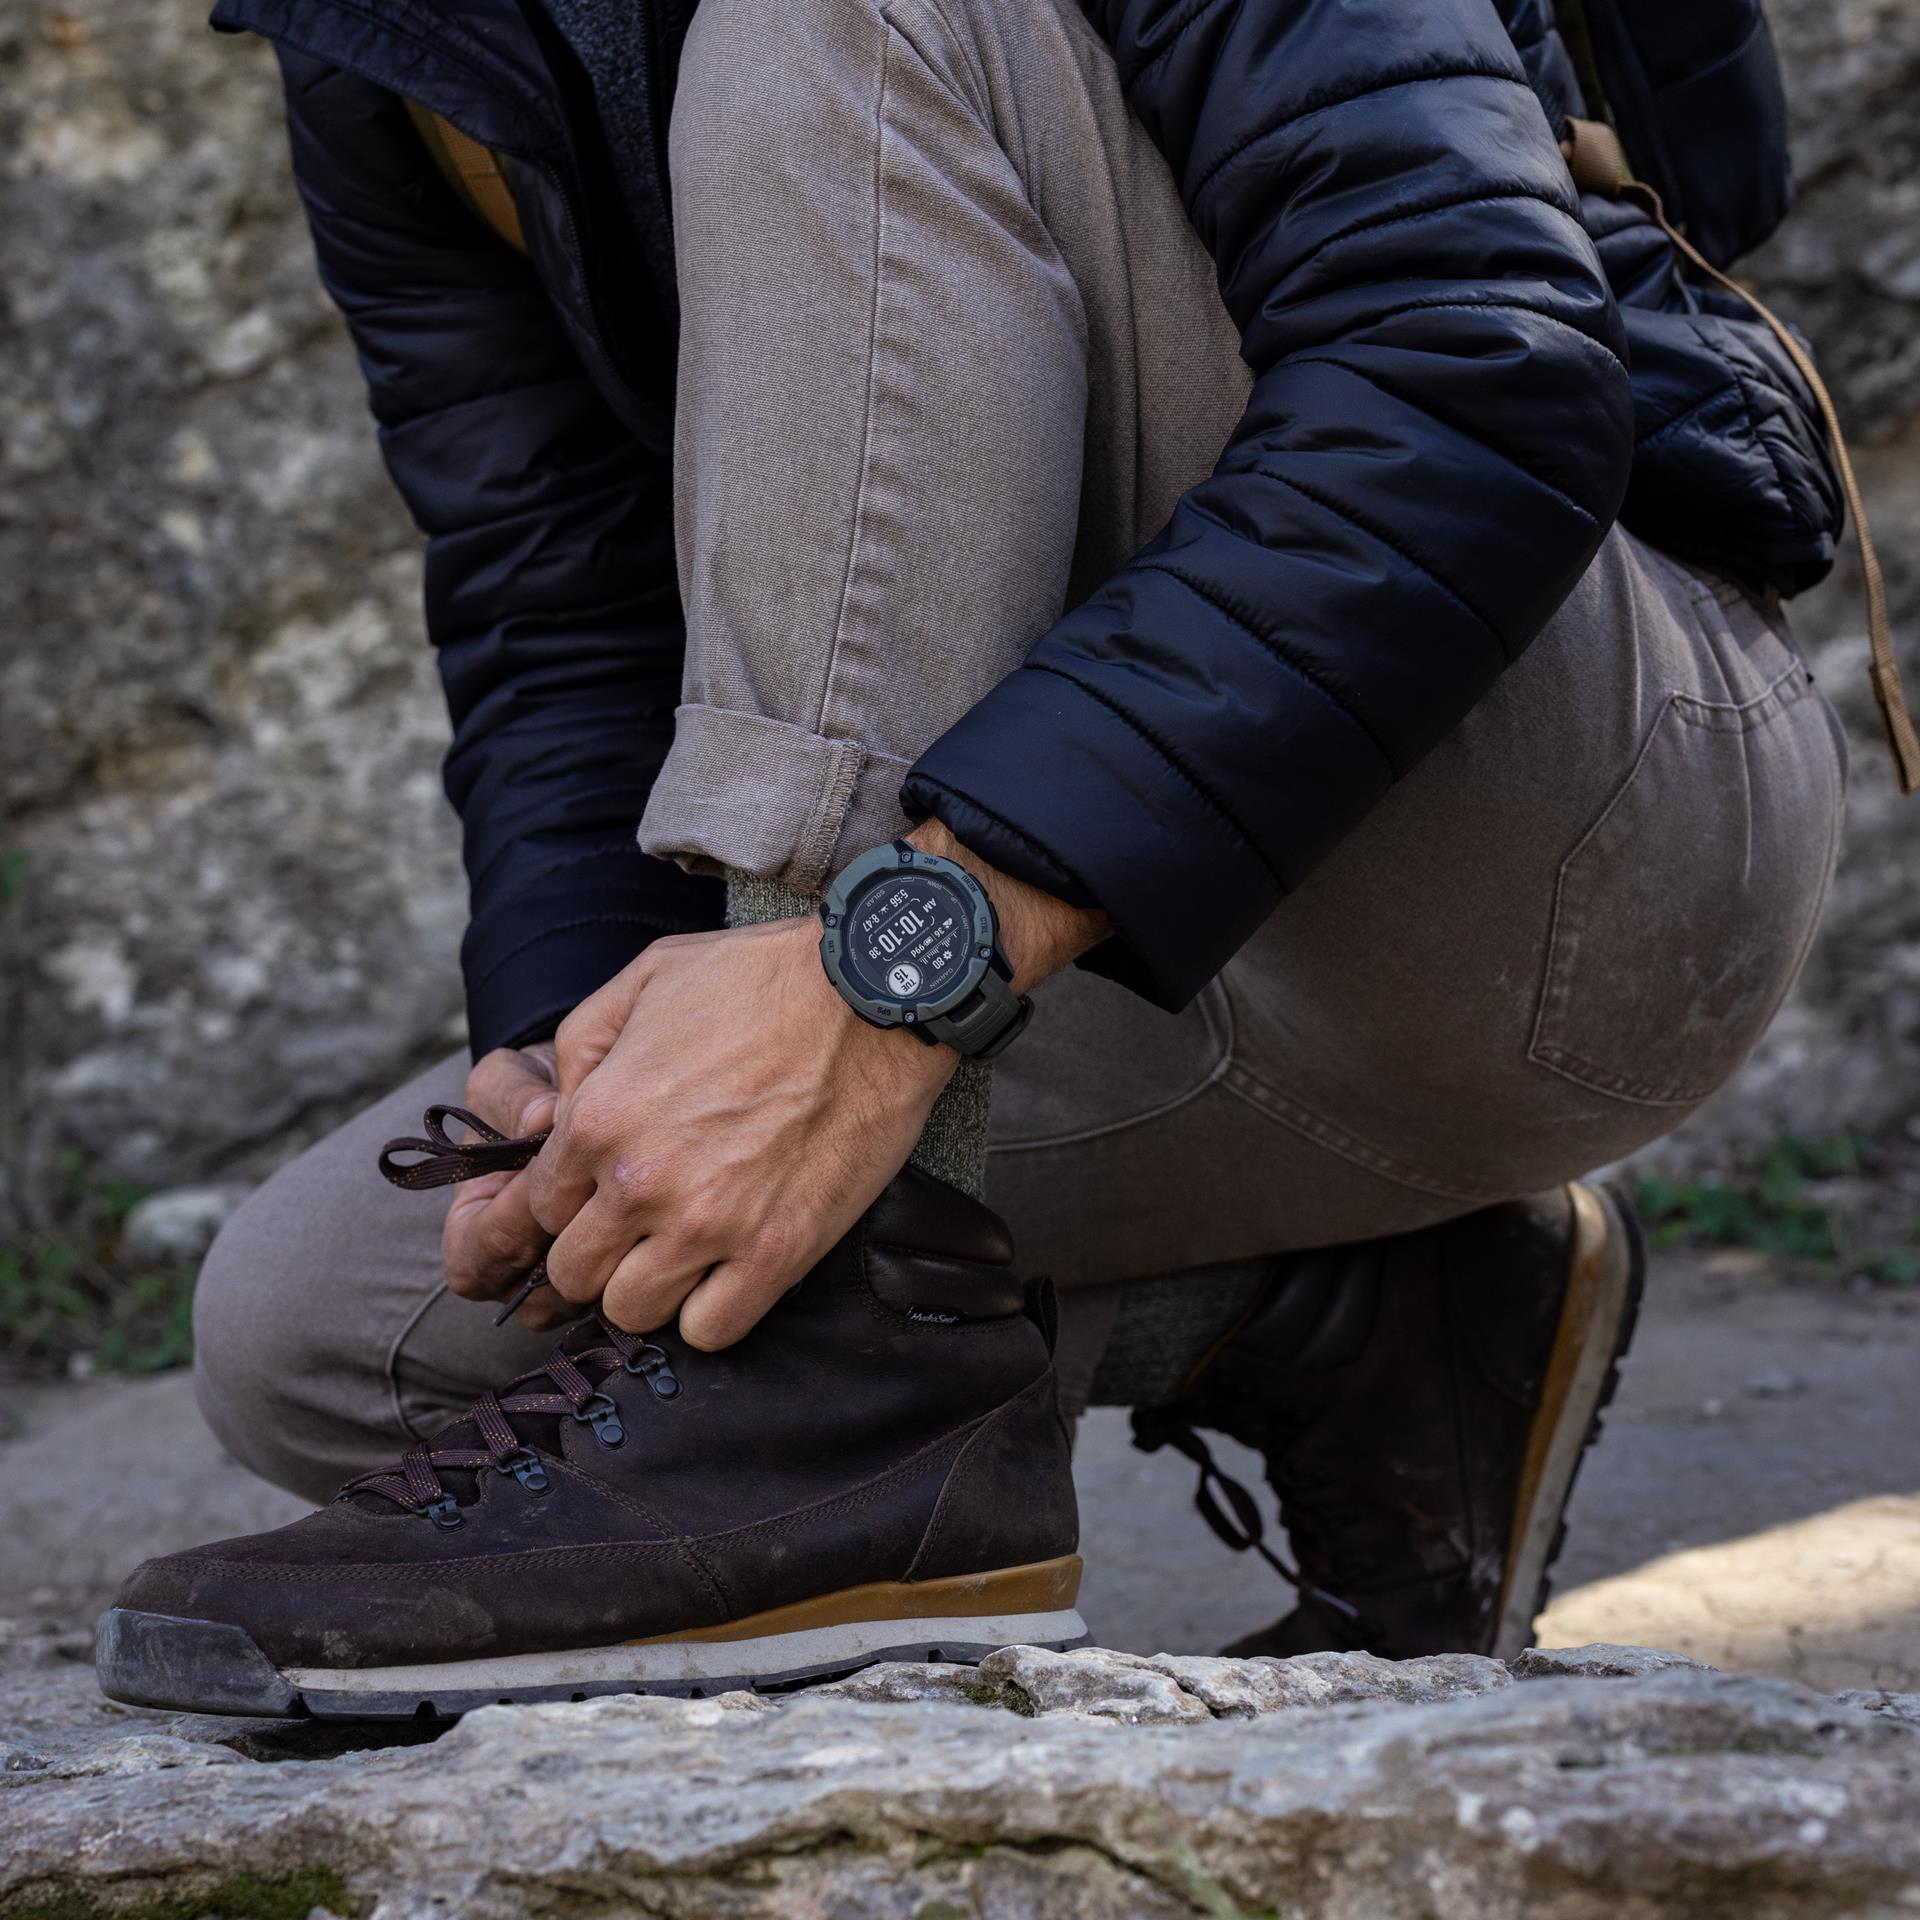 Garmin Instinct 2X Standard Solar Смарт-часы, 50 mm, цвета моха